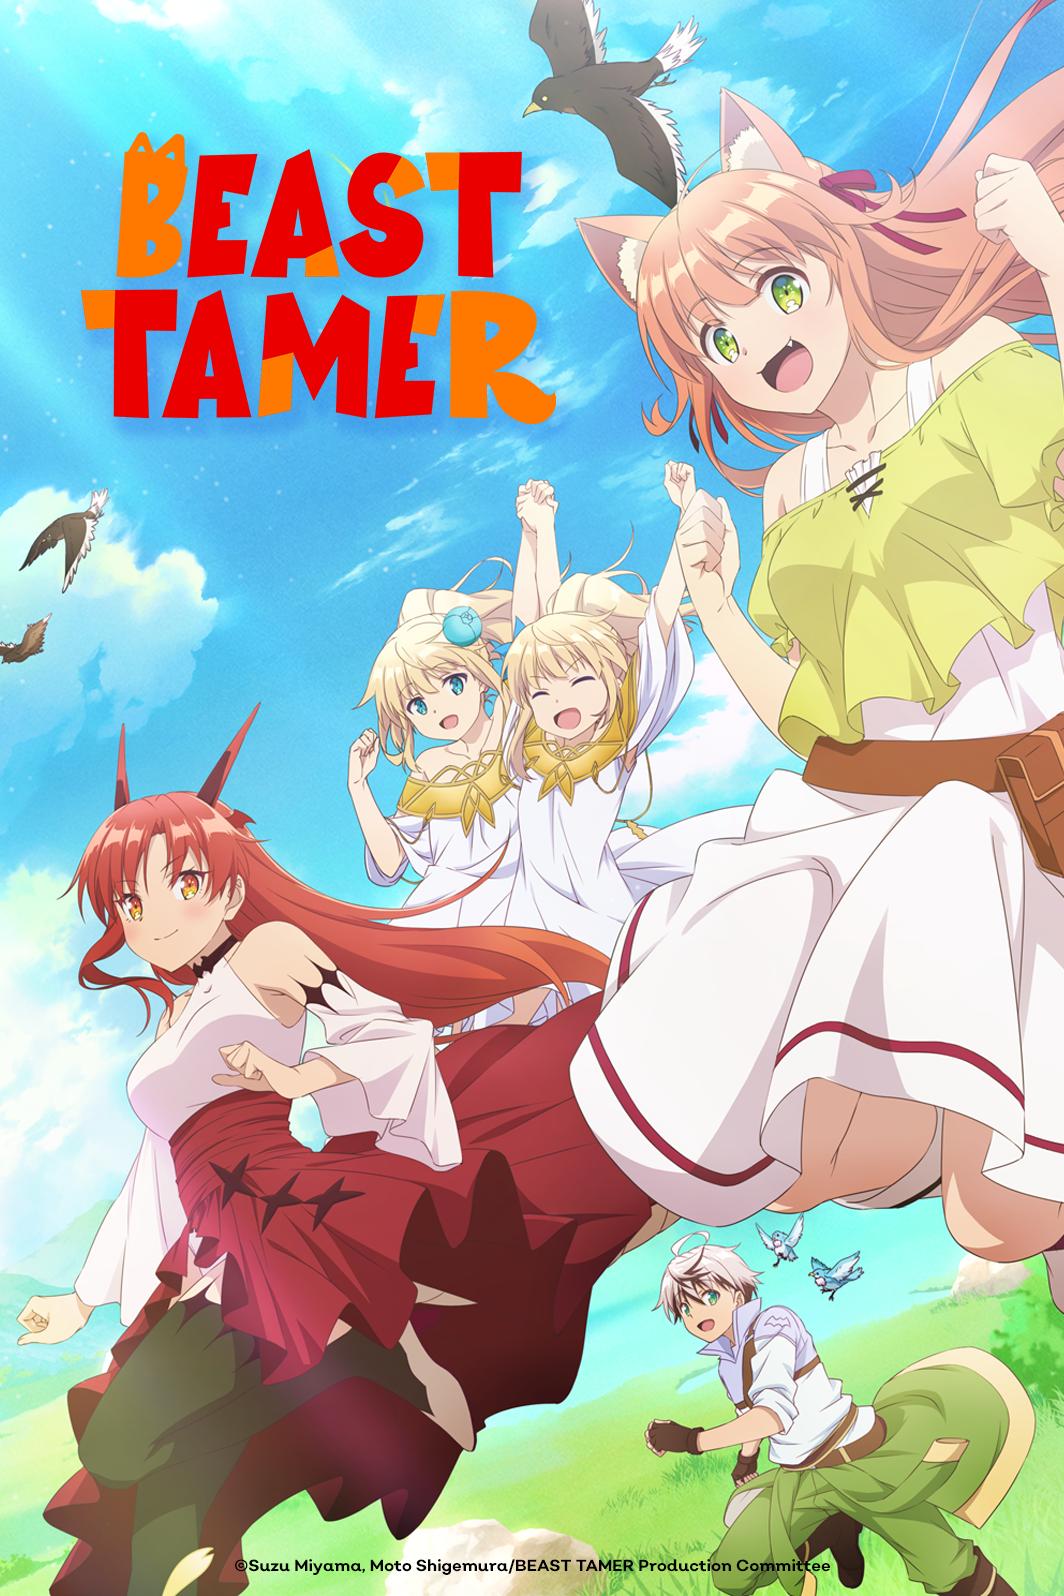 TV ratings for Beast Tamer (勇者パーティーを追放されたビーストテイマー、最強種の猫耳少女と出会う) in Argentina. Tokyo MX TV series